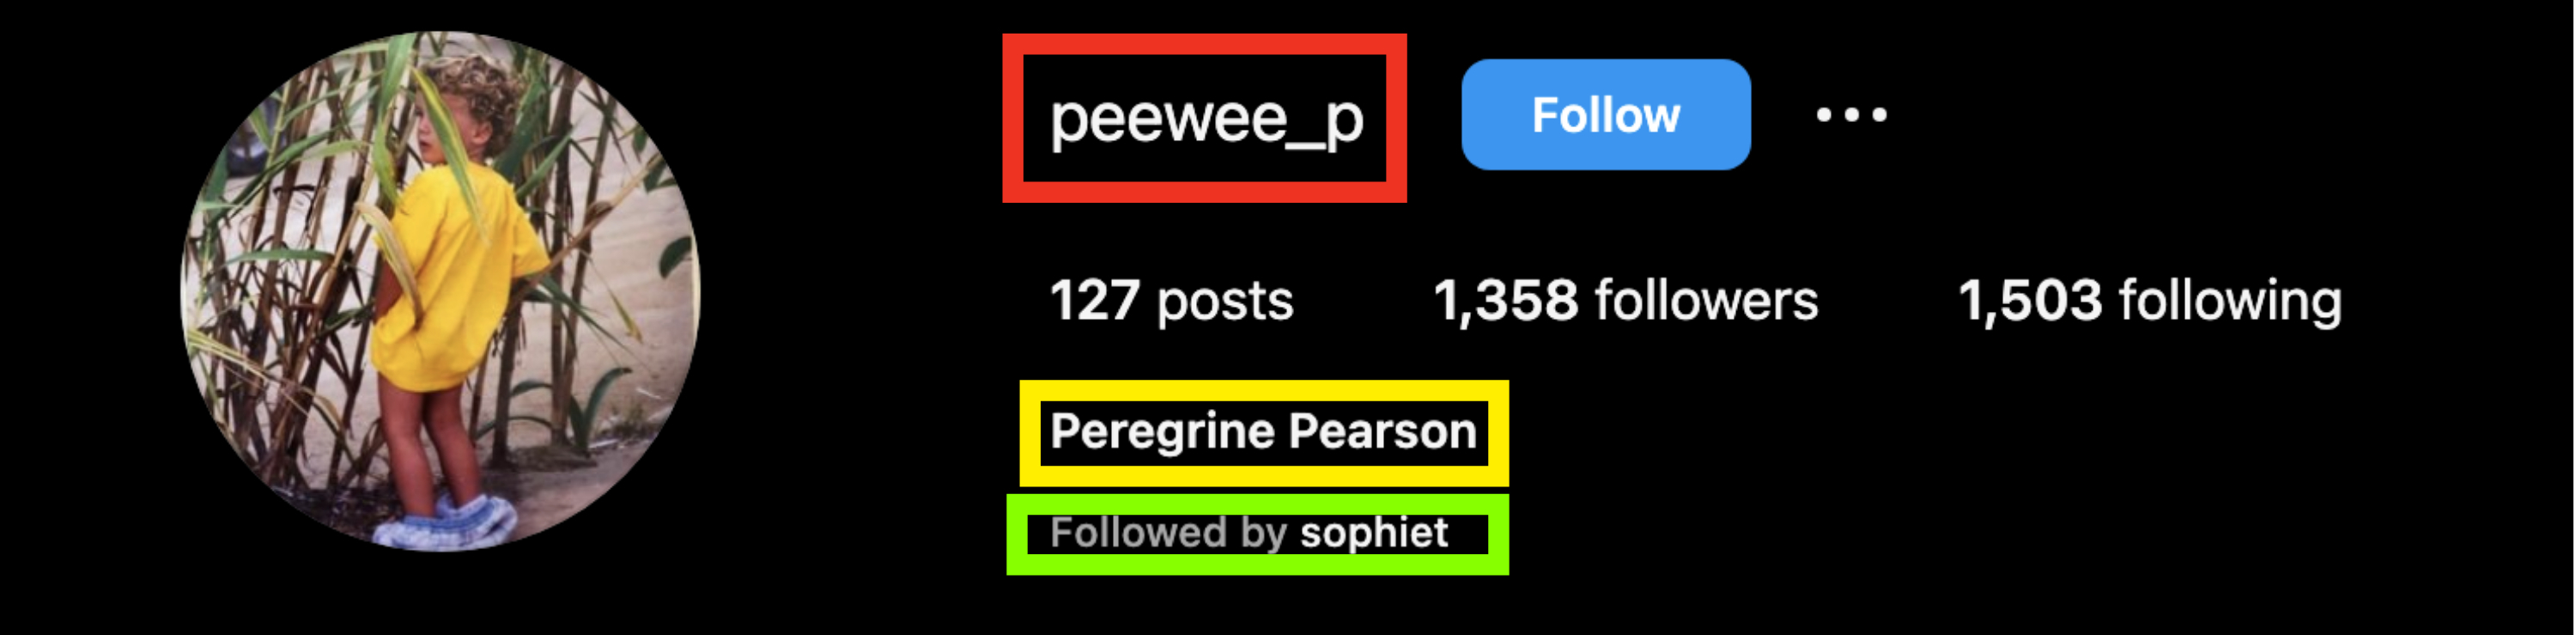 Screenshot of Peregrine Pearson&#x27;s Instagram account